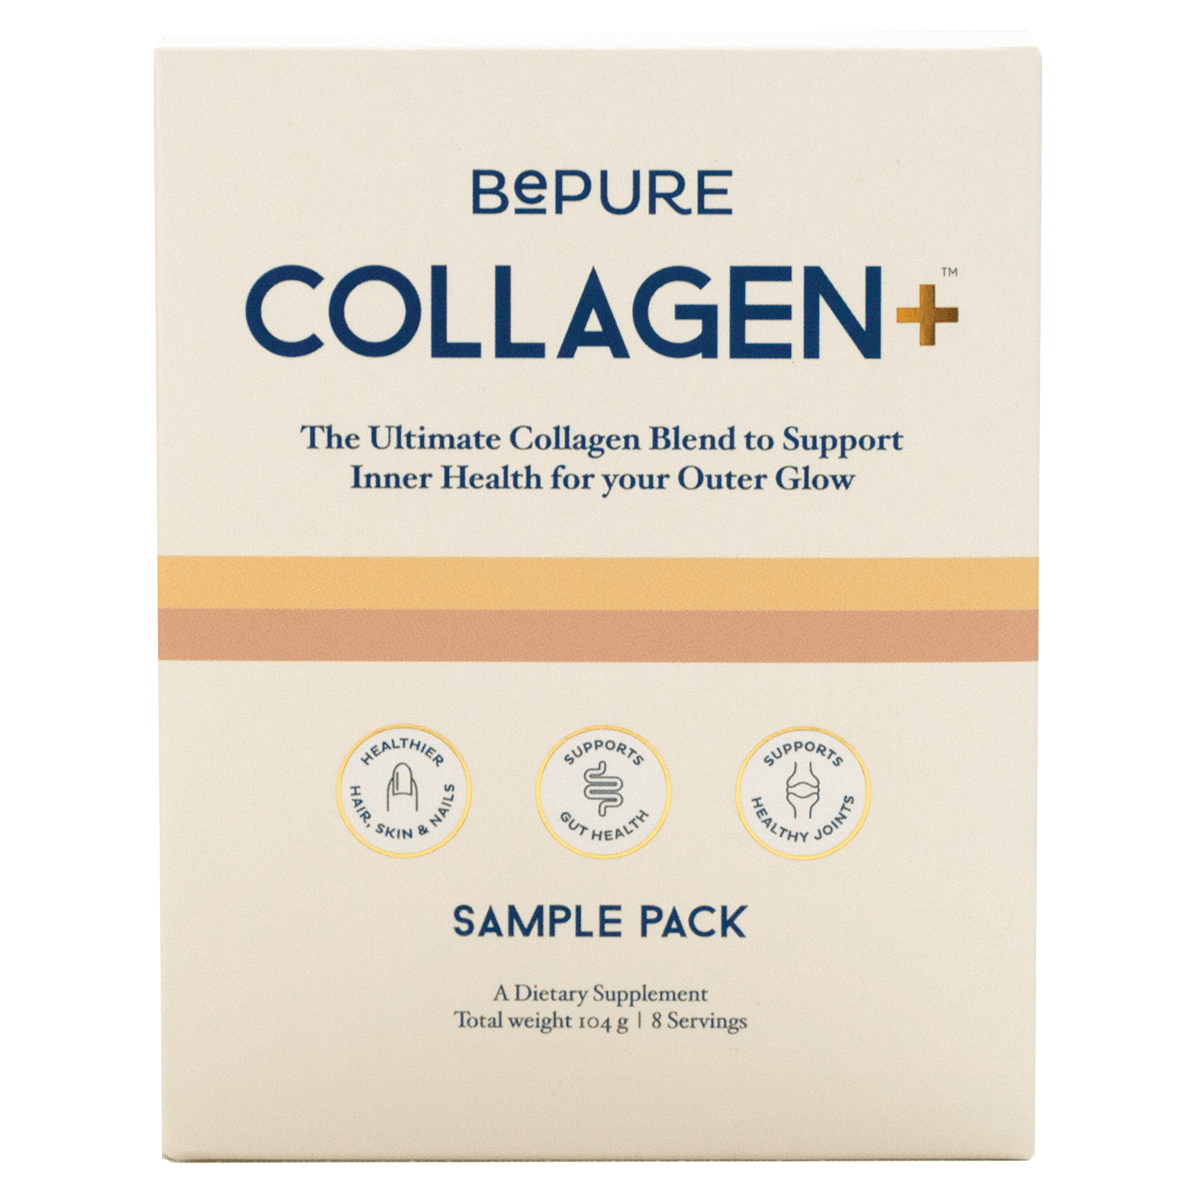 BePure Collagen+ Sample Pack